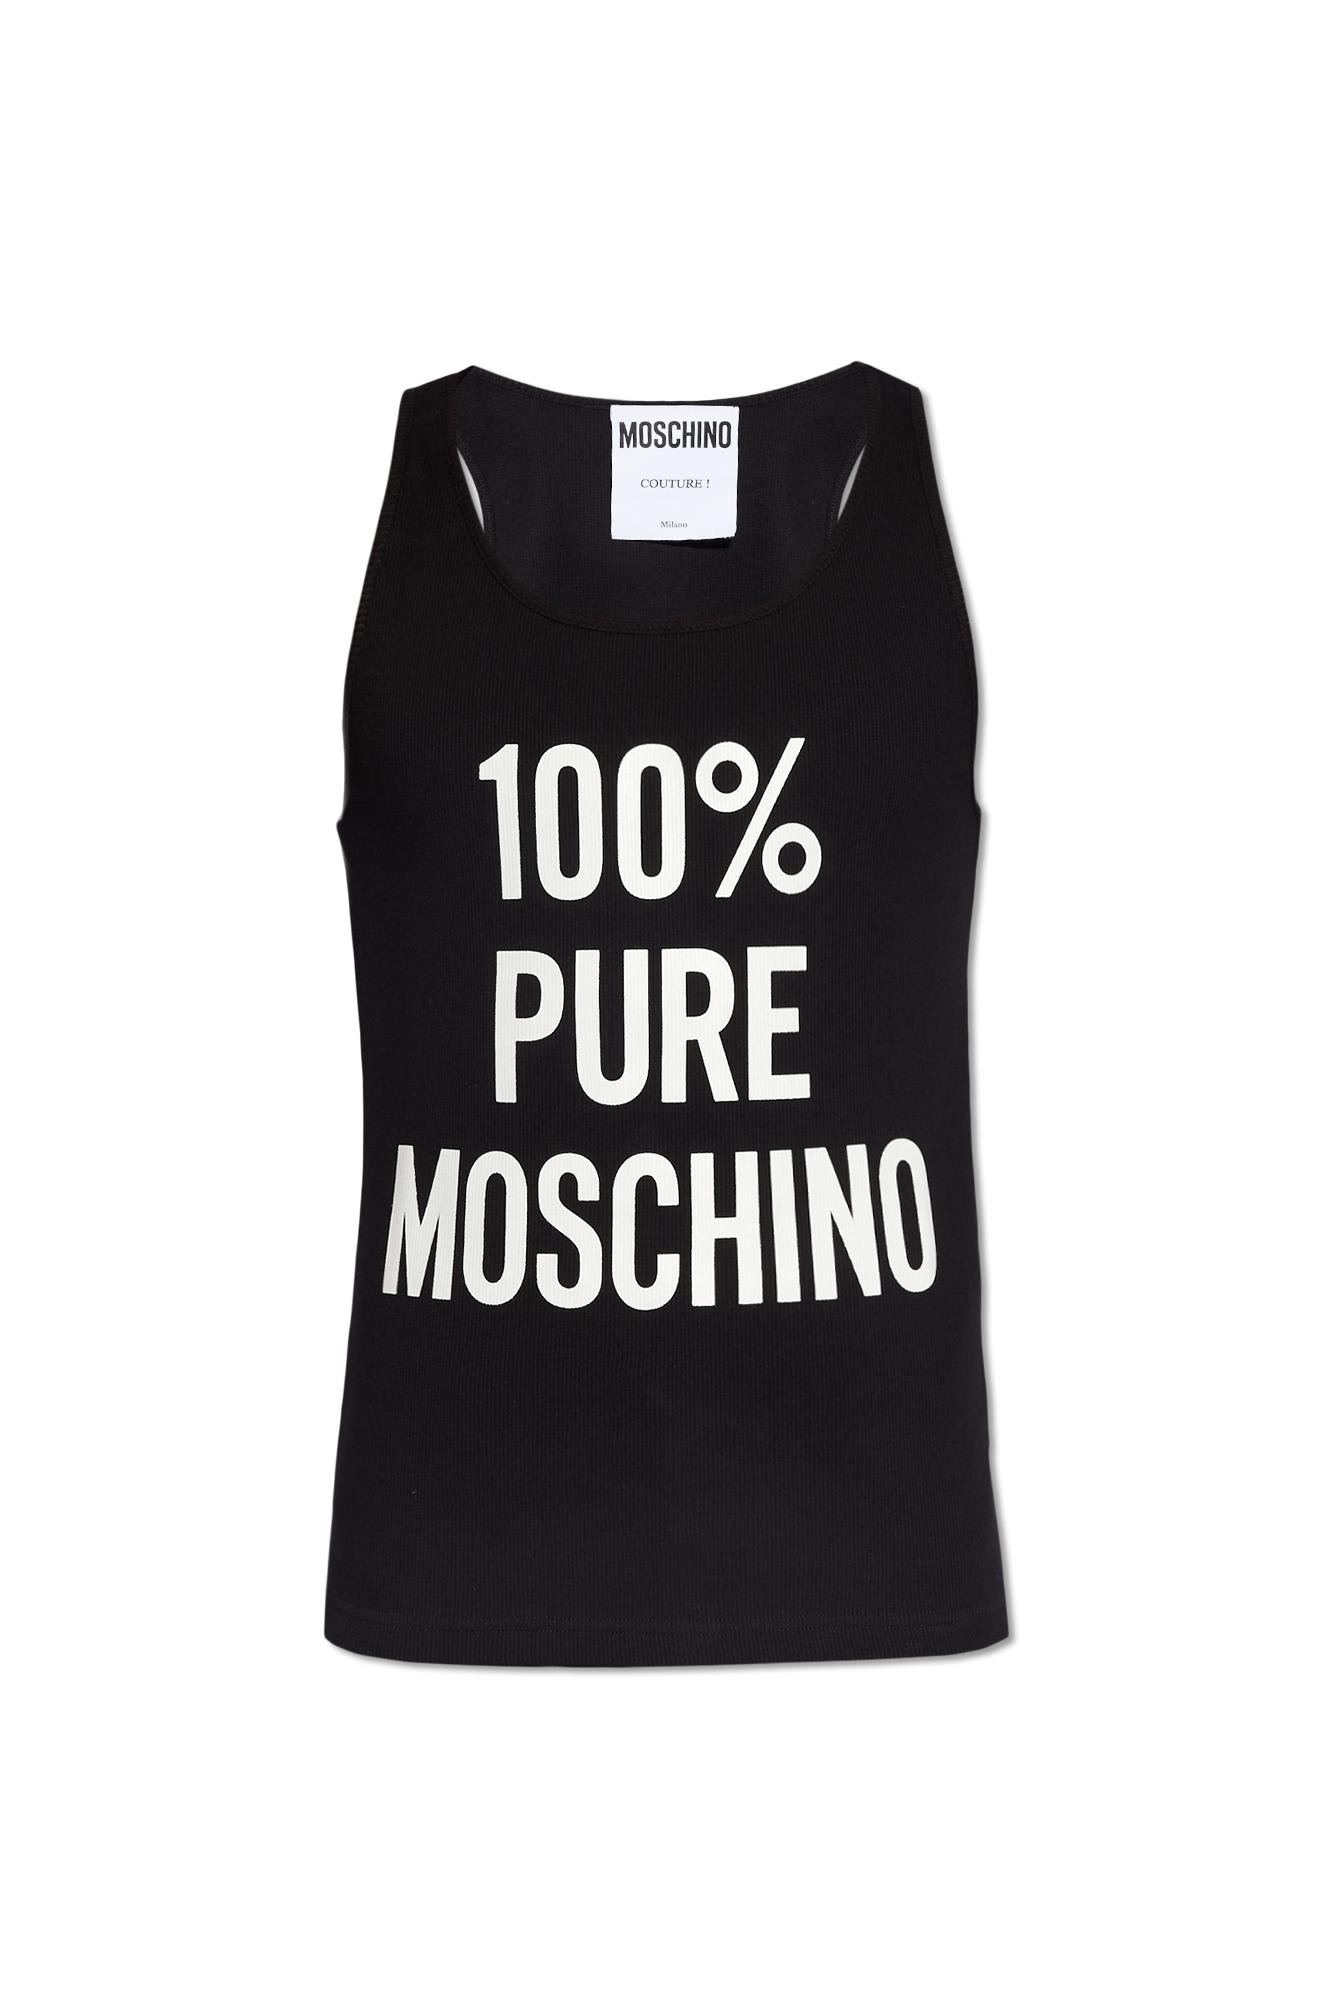 Moschino 100% Pure Tank Top